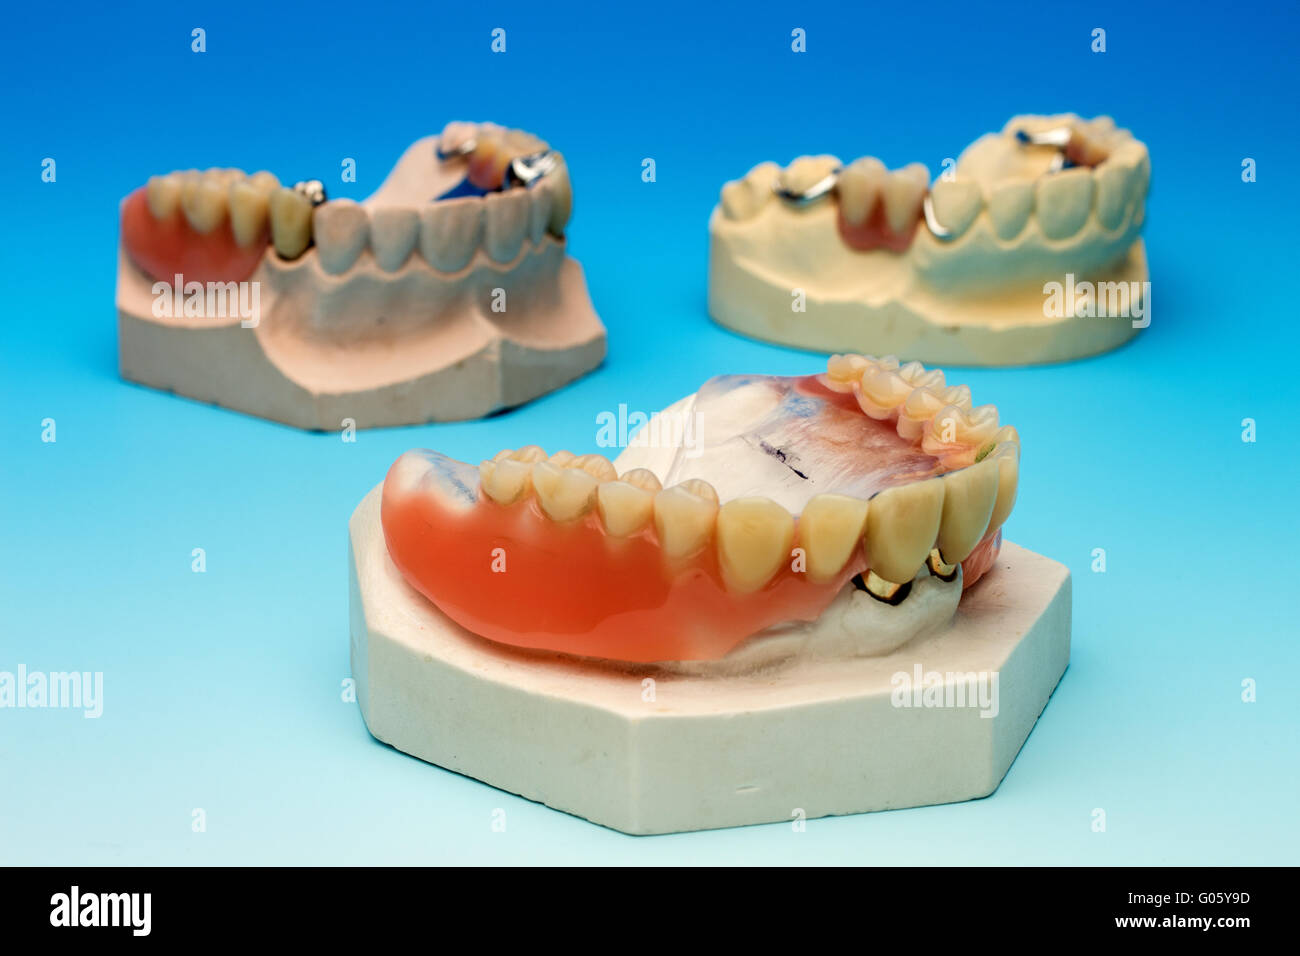 3 dentures on white blue gradient Stock Photo